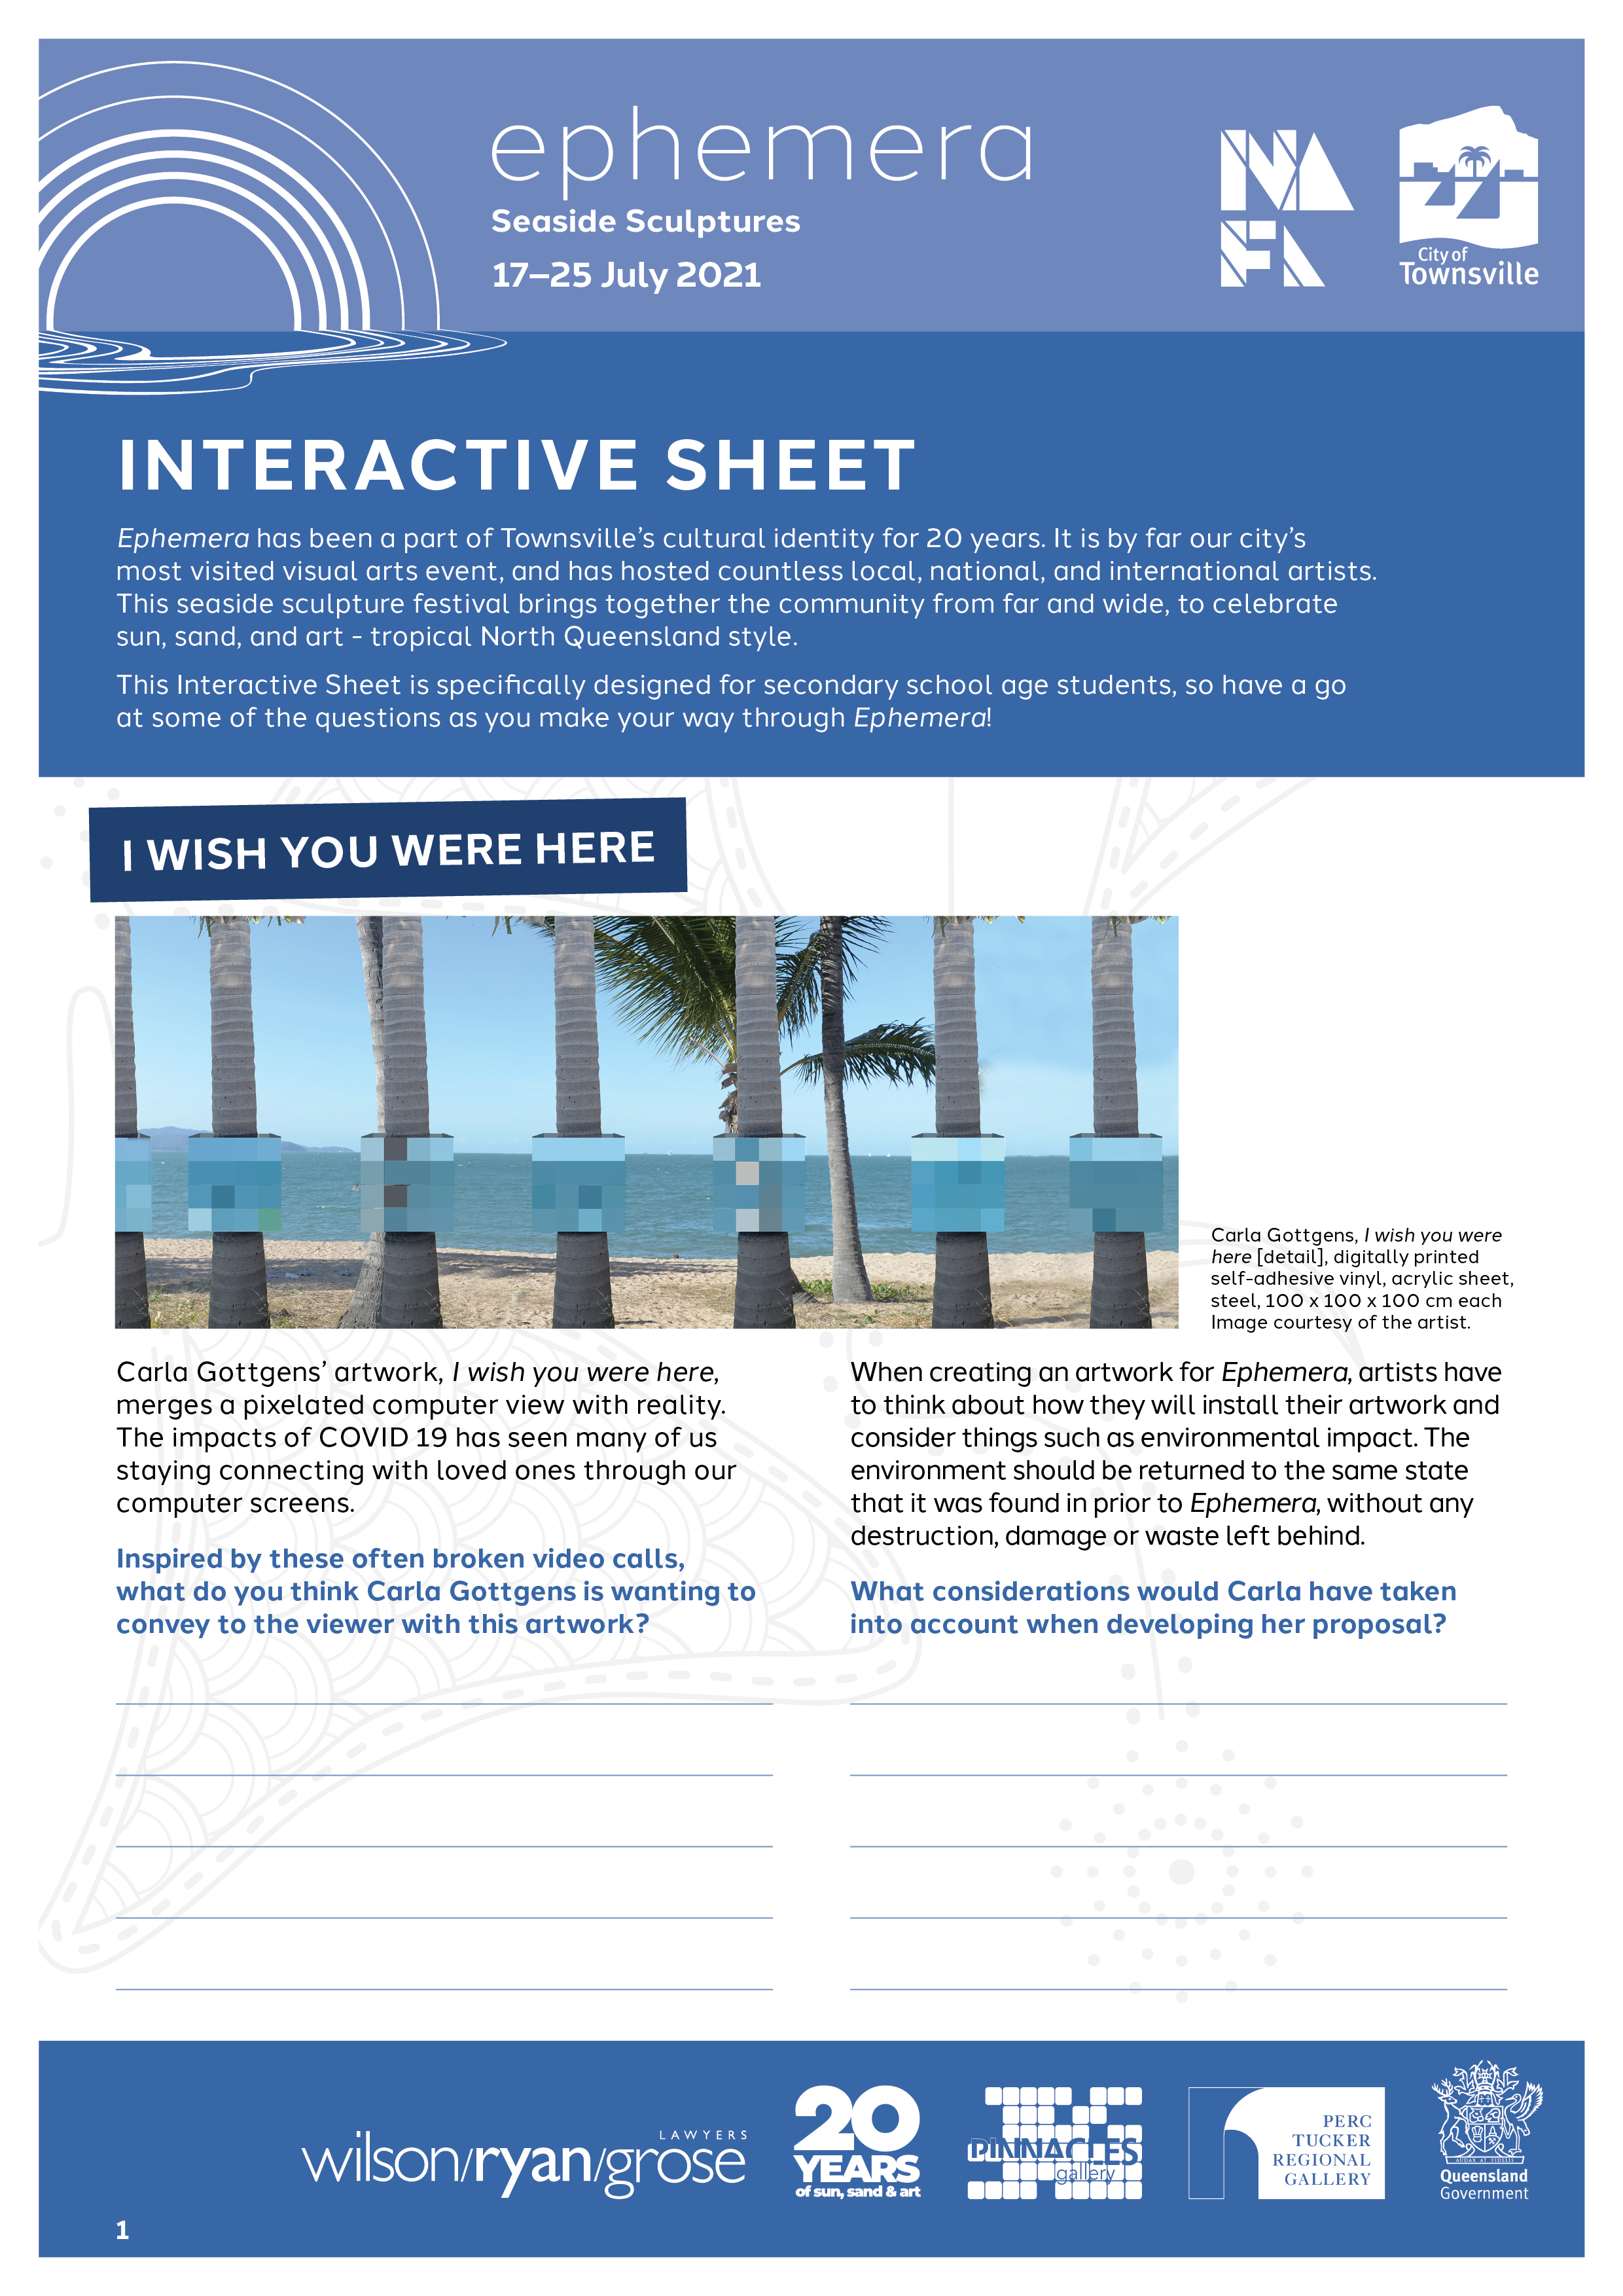 Ephemera - EDU Interactive Sheet Cover